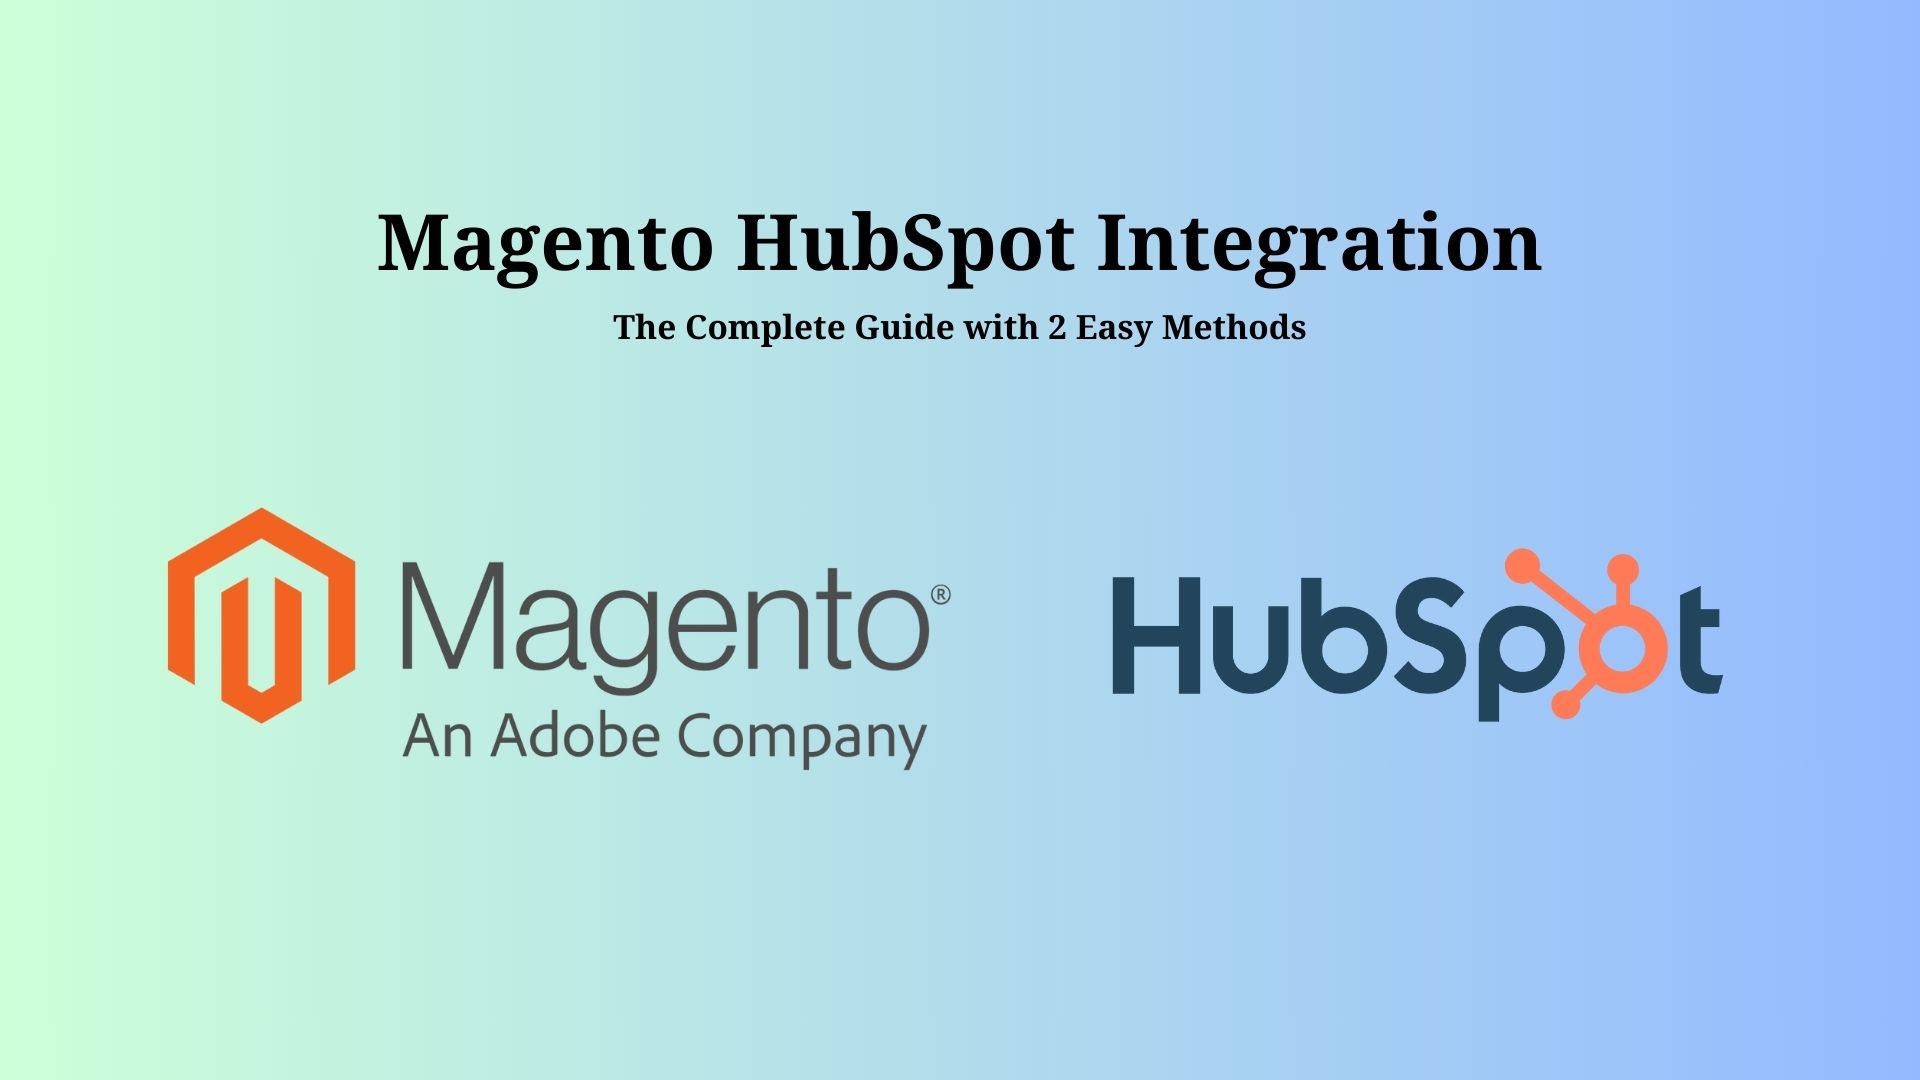 magento hubspot integration featured